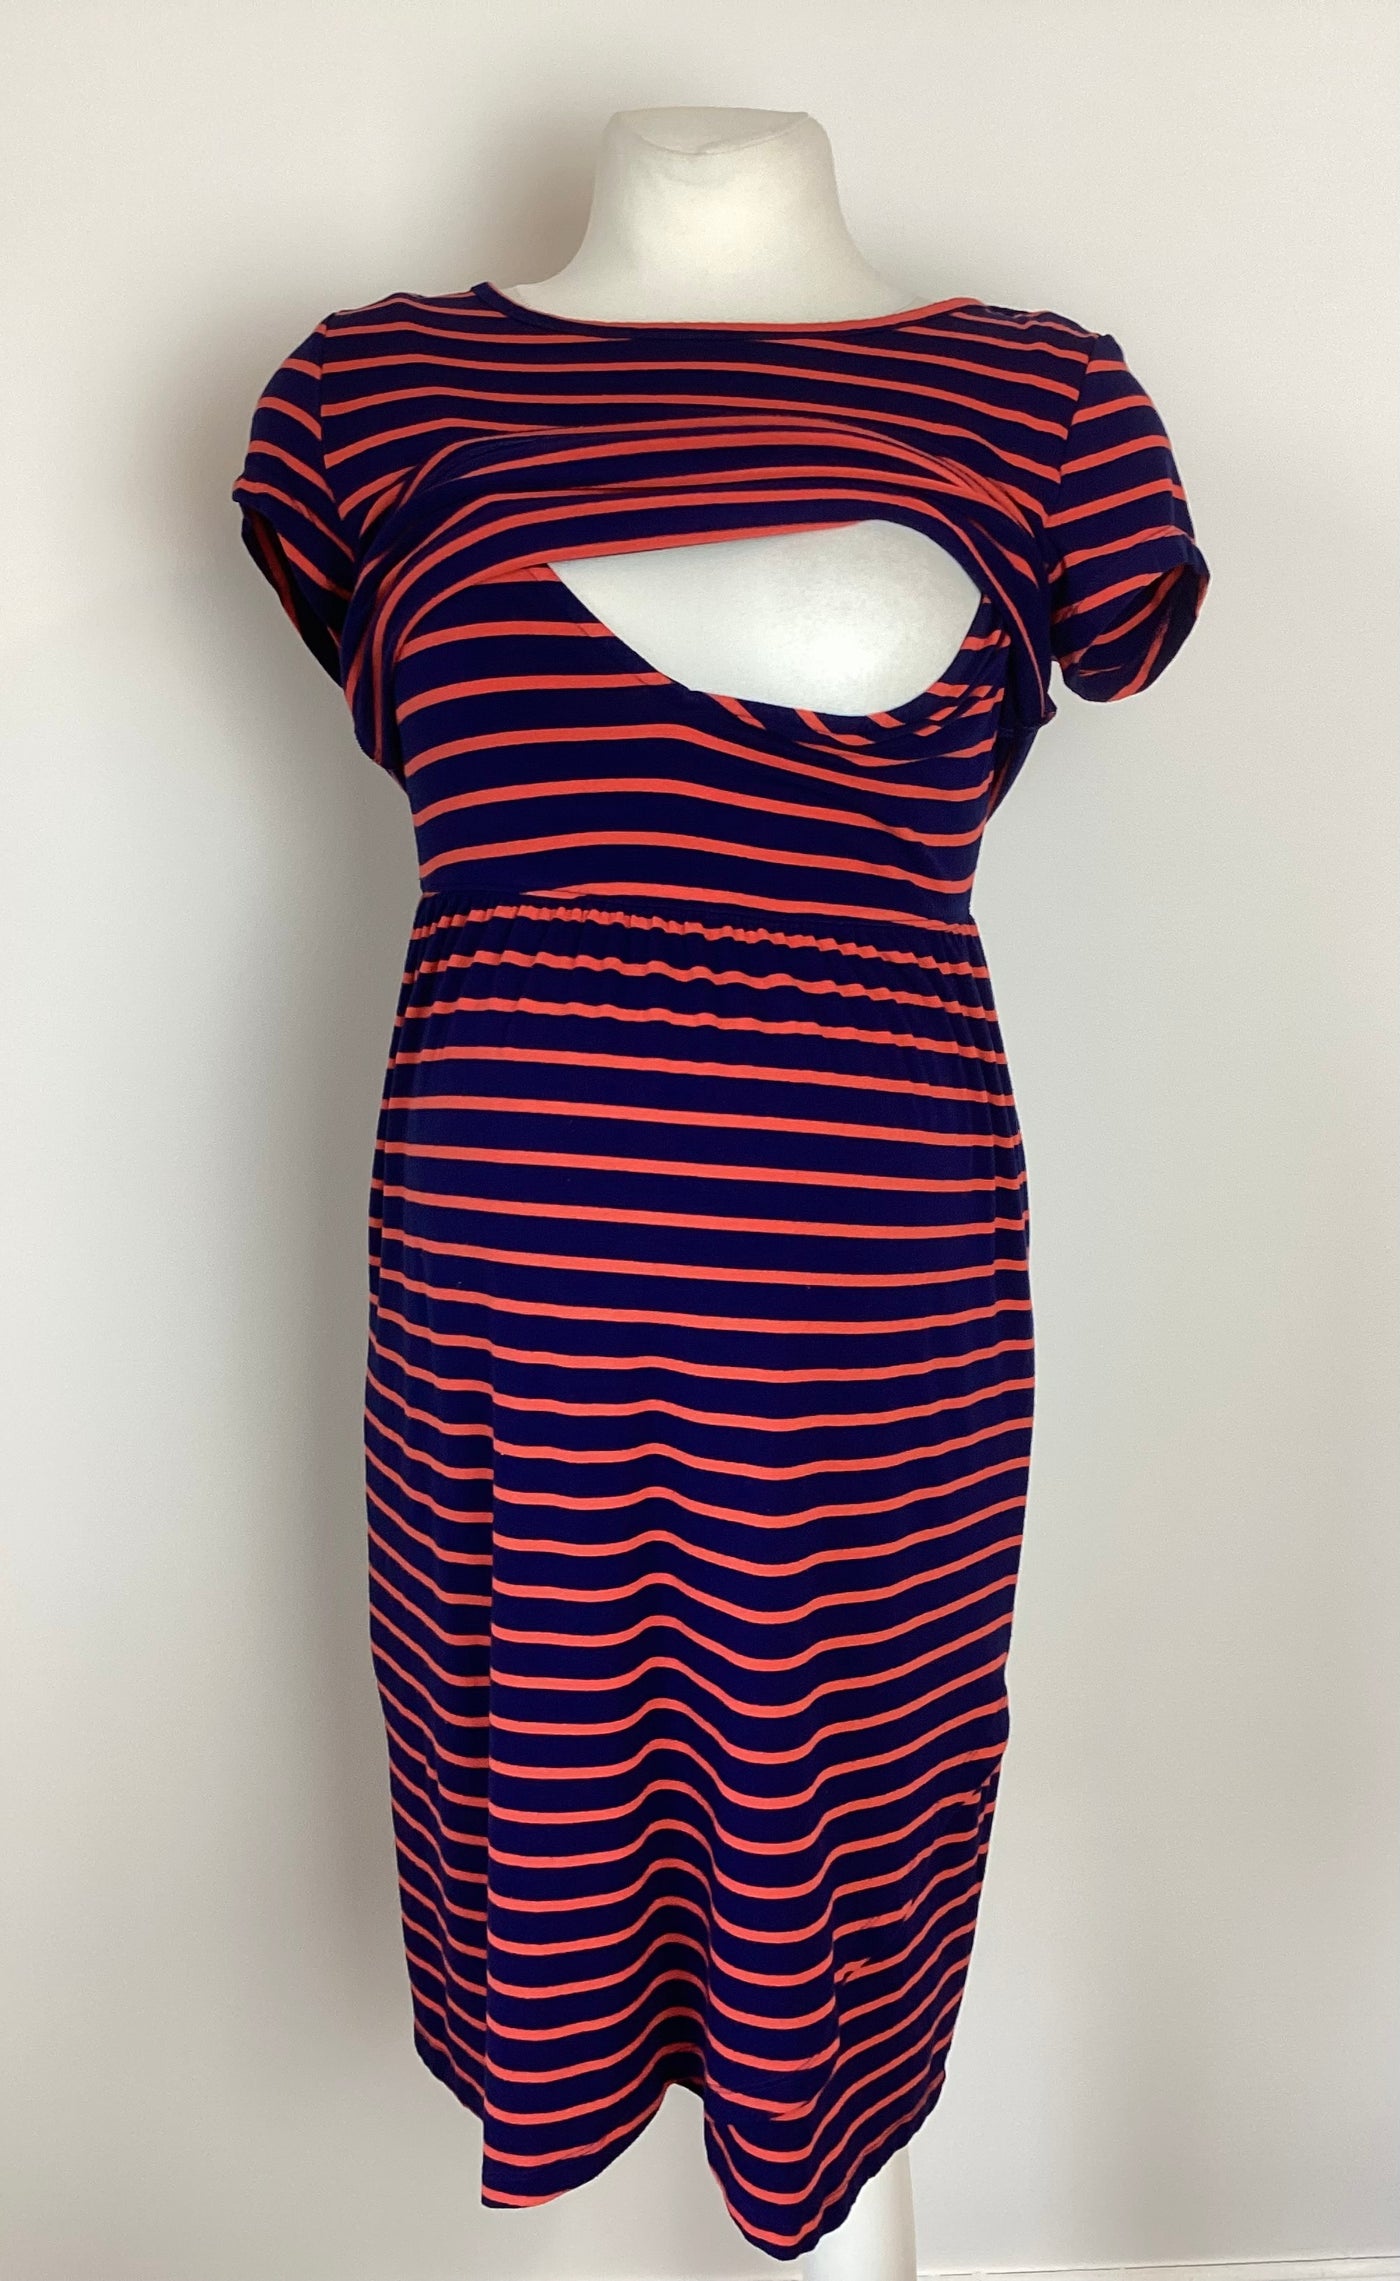 GAP Maternity navy & red stripe short sleeved nursing dress - Size XS (Approx UK 6/8)